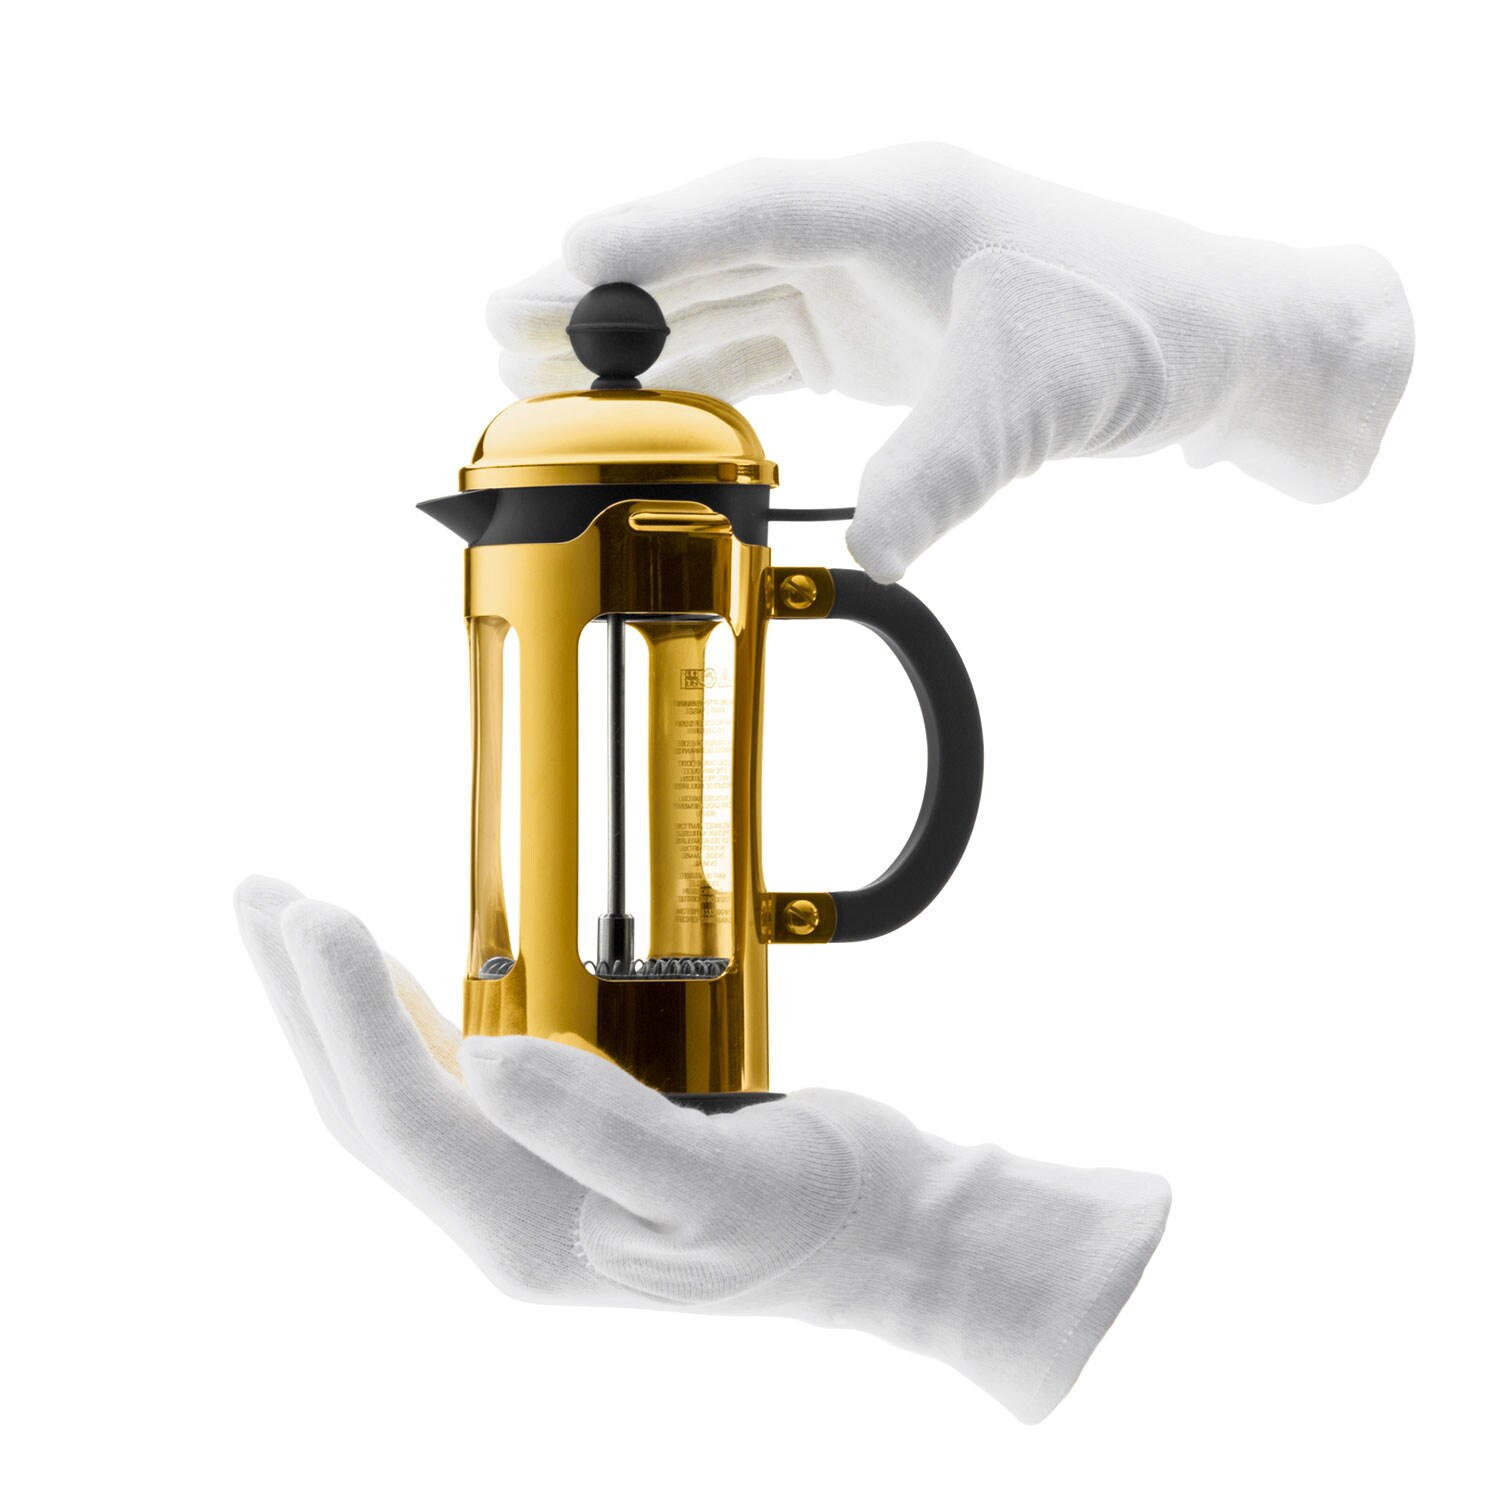 https://royaldesign.com/image/2/bodum-chambord-coffee-press-3-cups-5